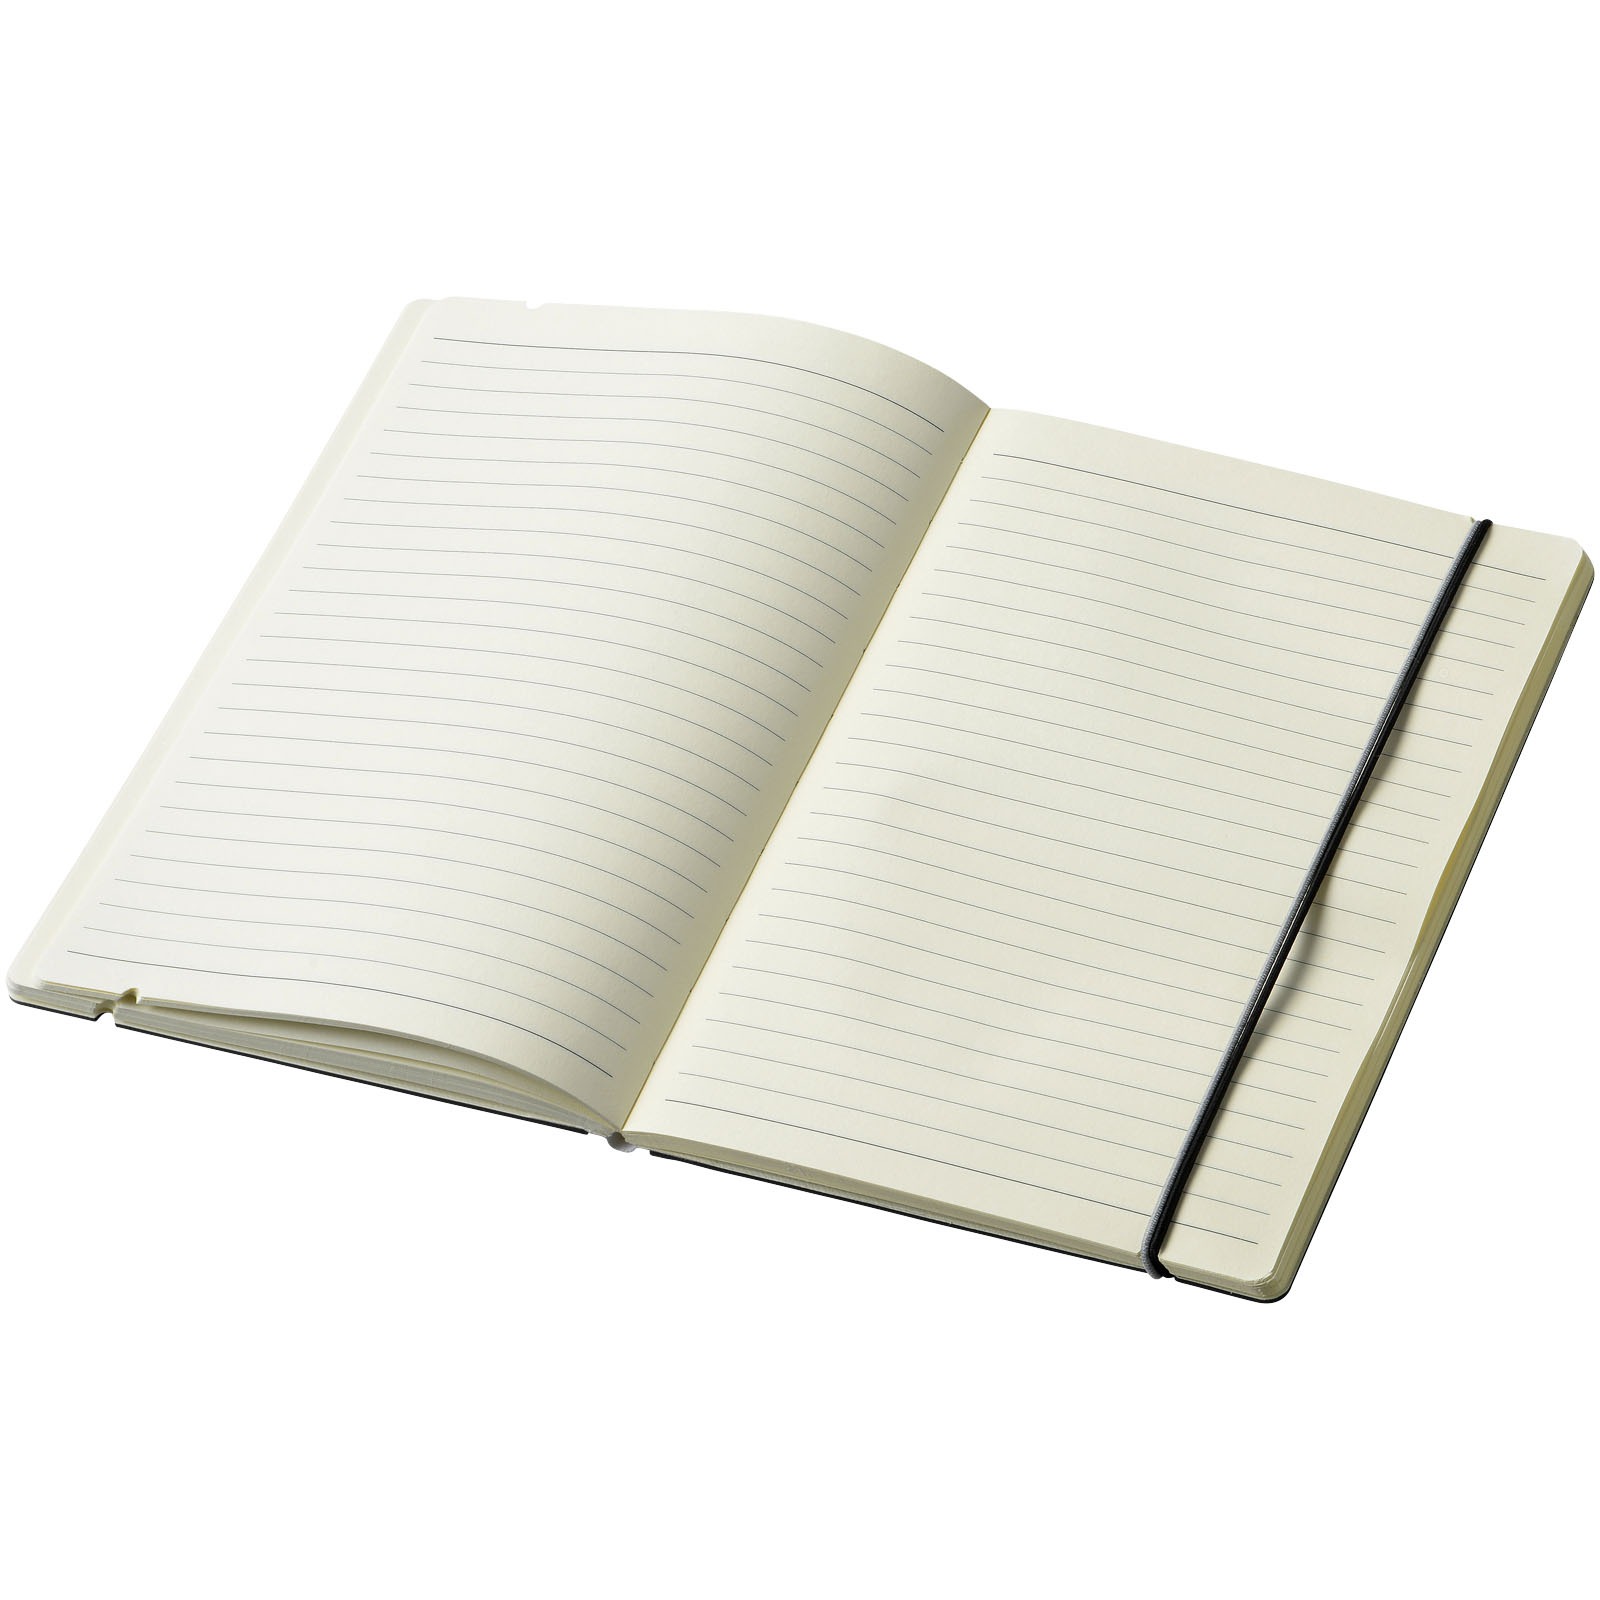 Premium Regency A5 Notebooks, Company Notebooks